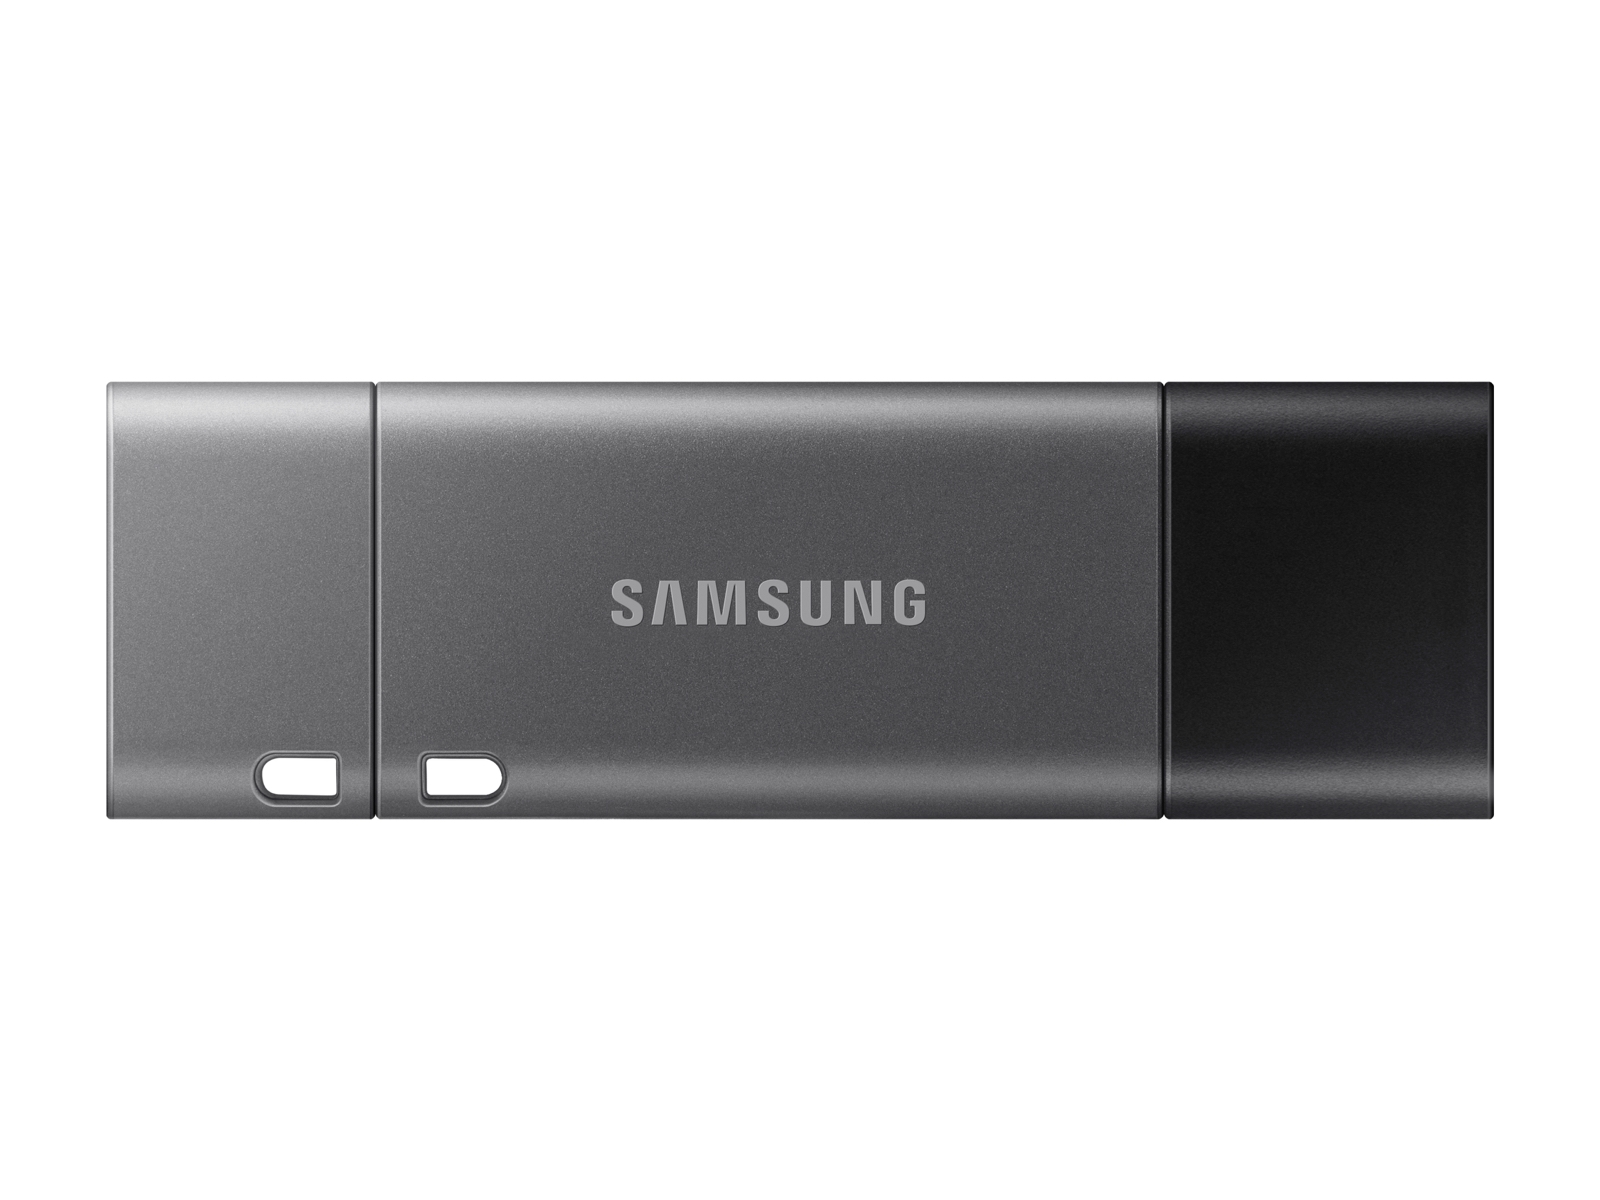 teknisk Styrke til USB 3.1 Flash Drive DUO Plus 256GB Memory & Storage - MUF-256DB/AM |  Samsung US